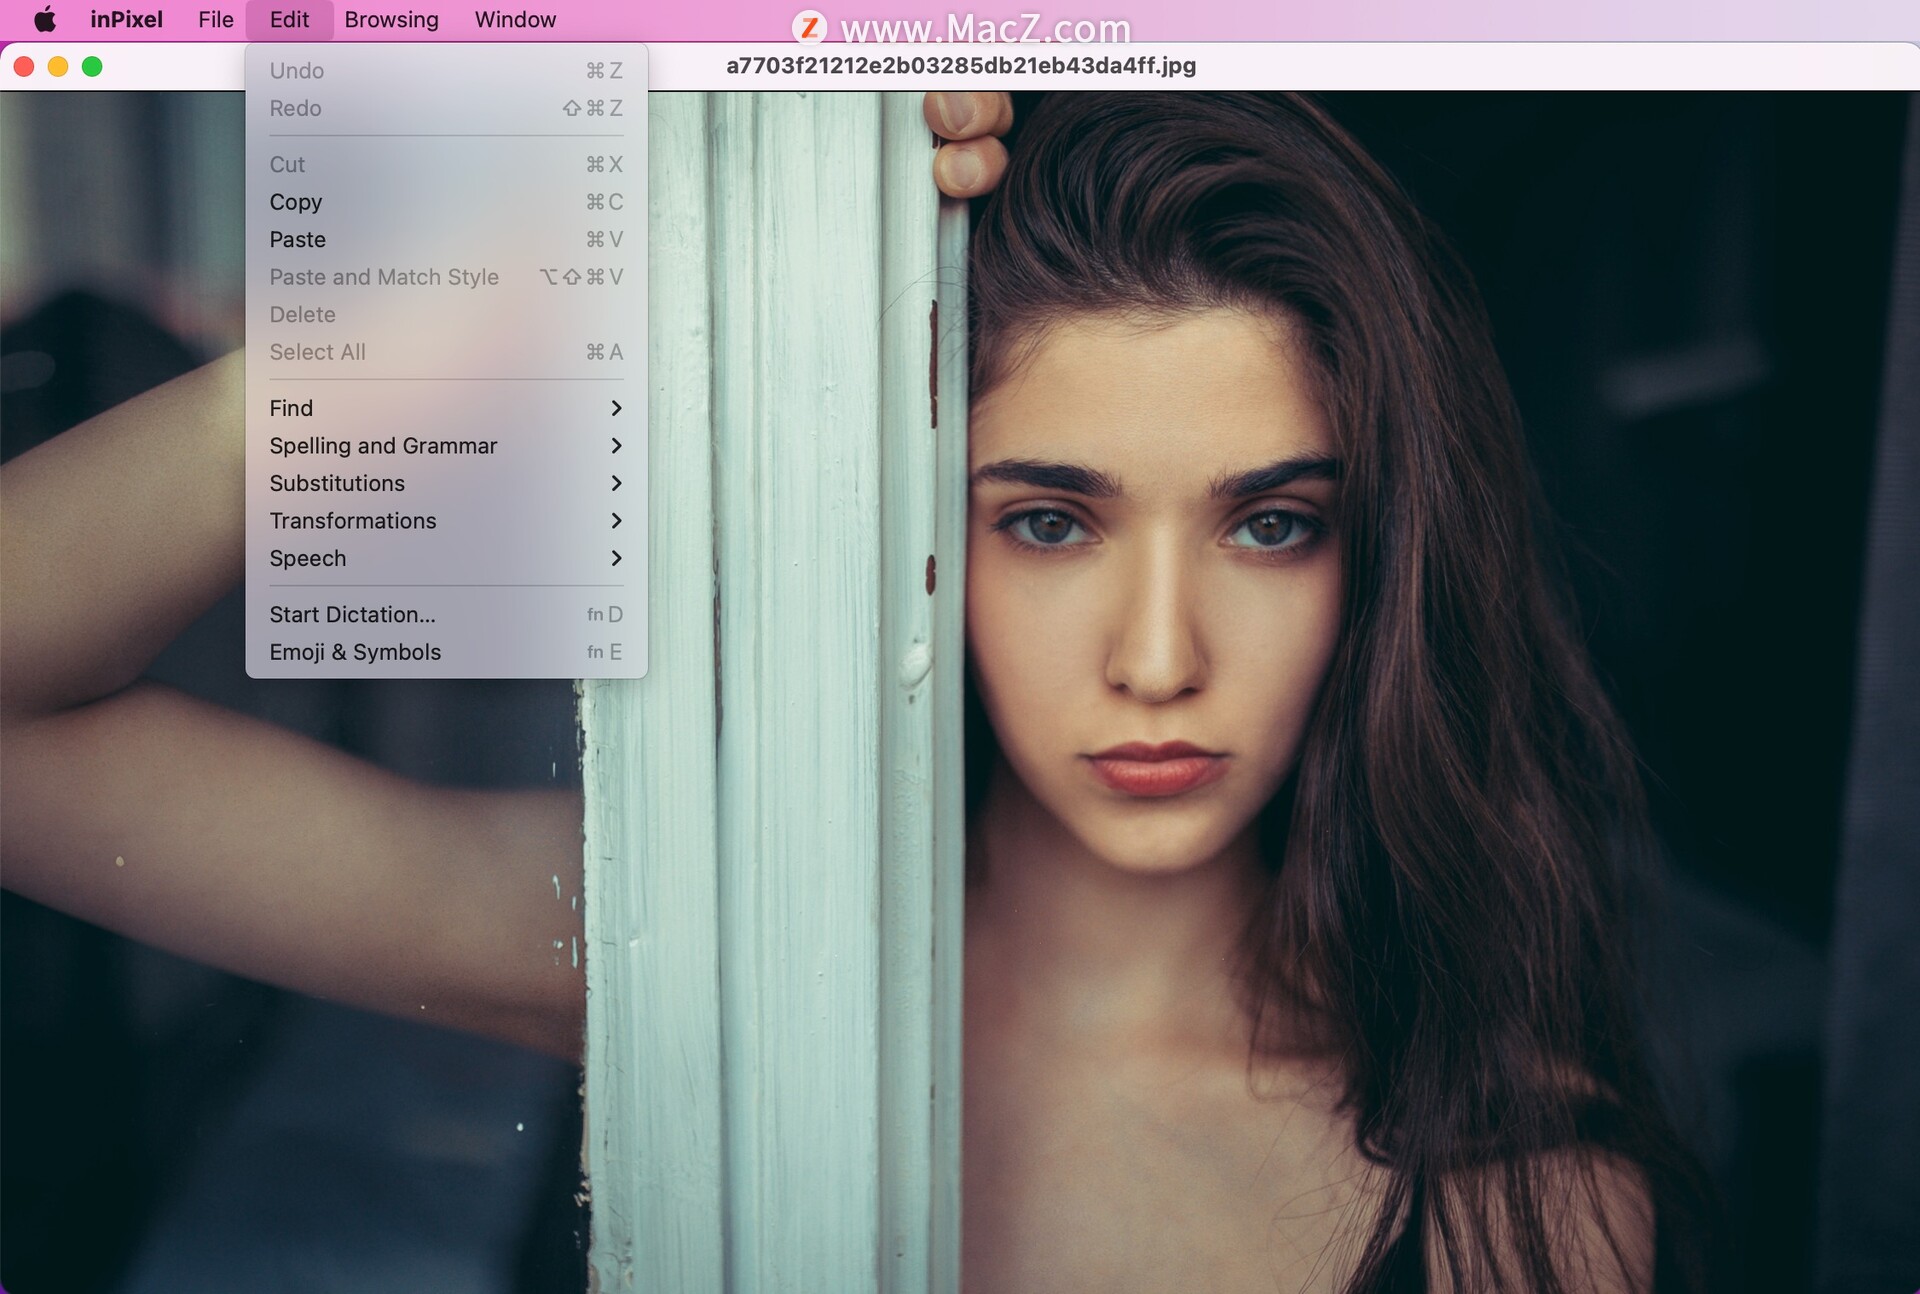 Capture One Pro 23 for Mac(强大Raw图像处理软件) v16.1.2.20中文版 - 哔哩哔哩